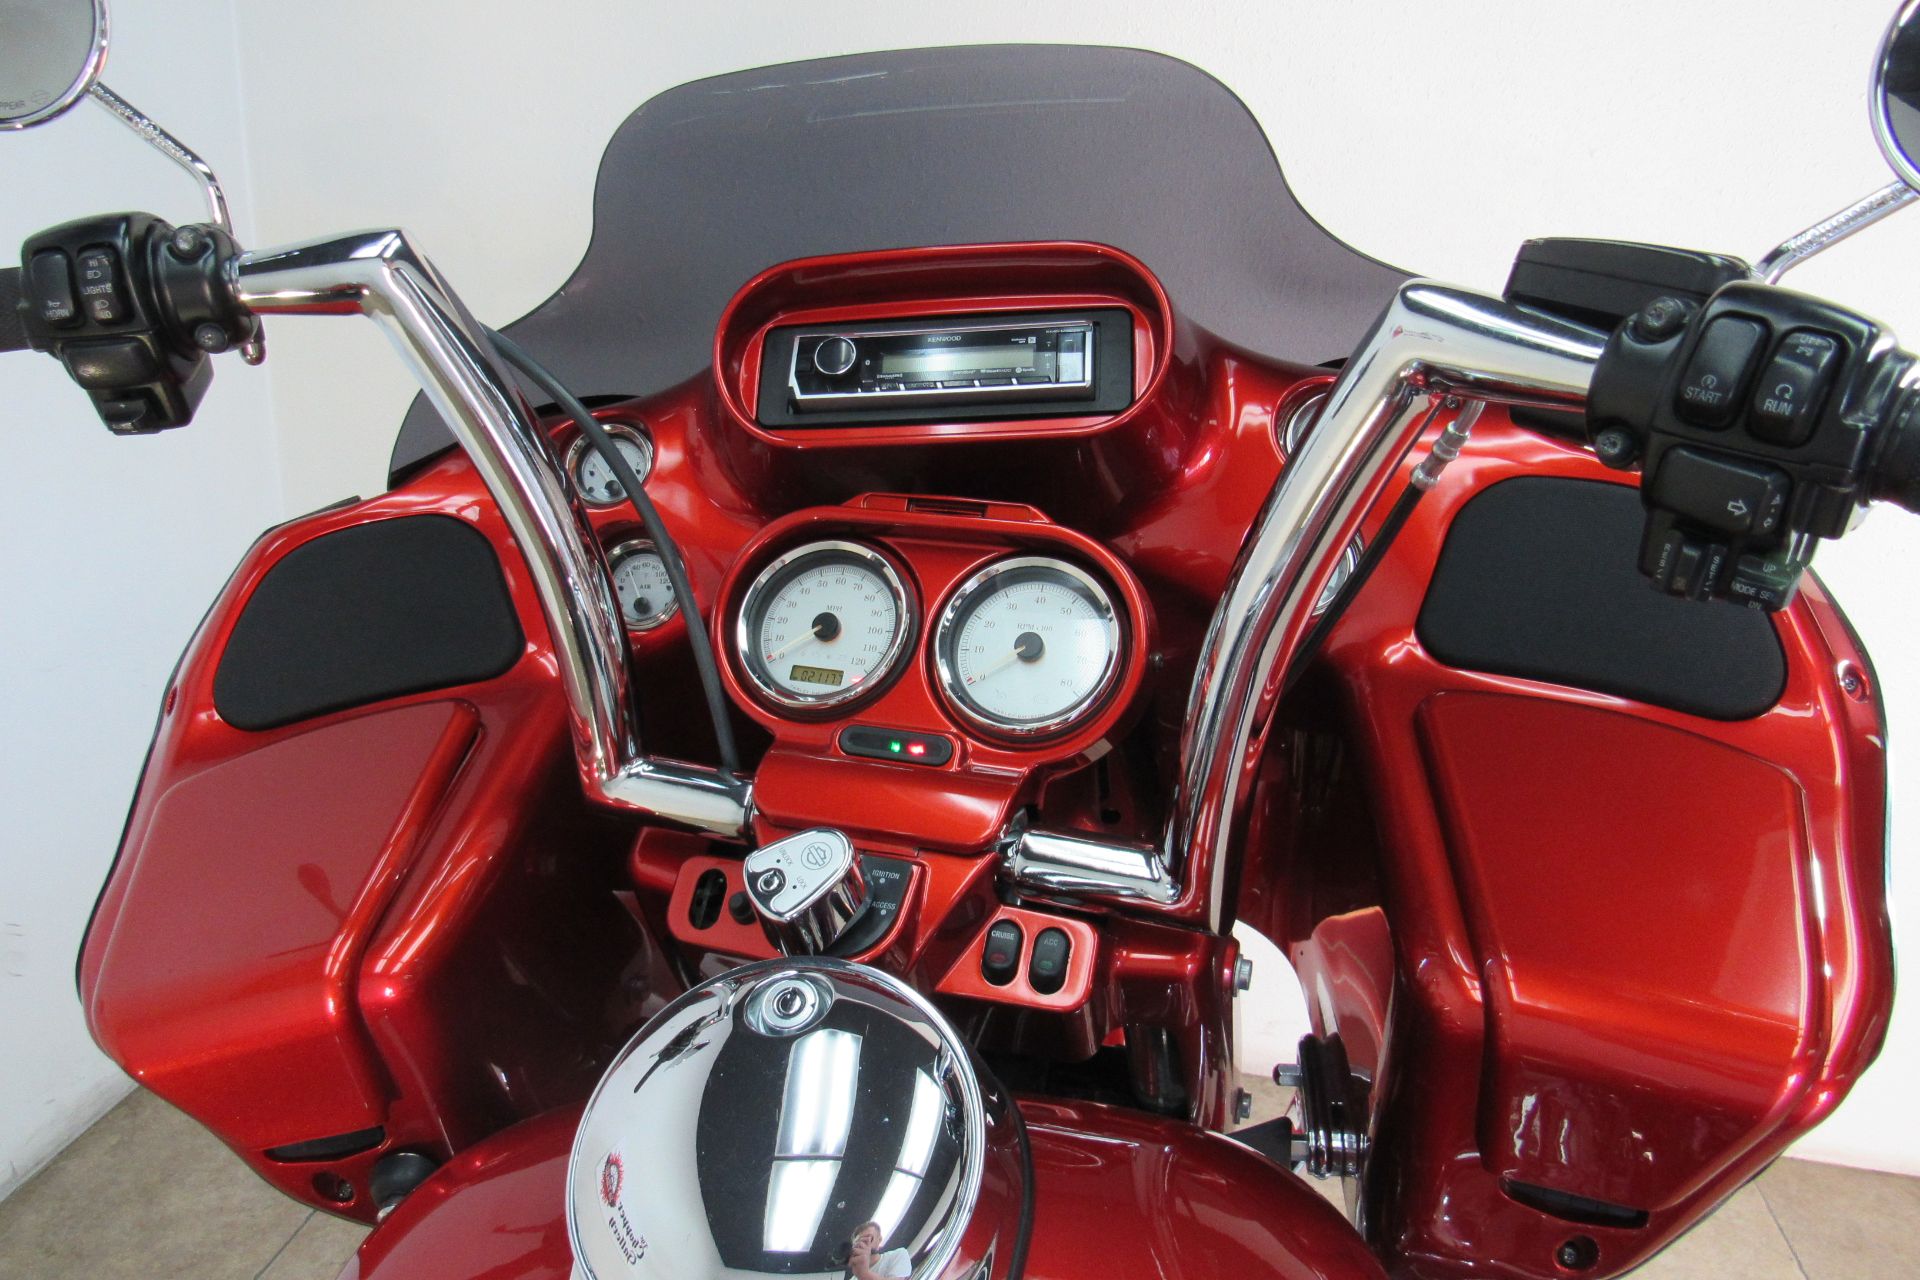 2013 Harley-Davidson Road Glide® Custom in Temecula, California - Photo 19